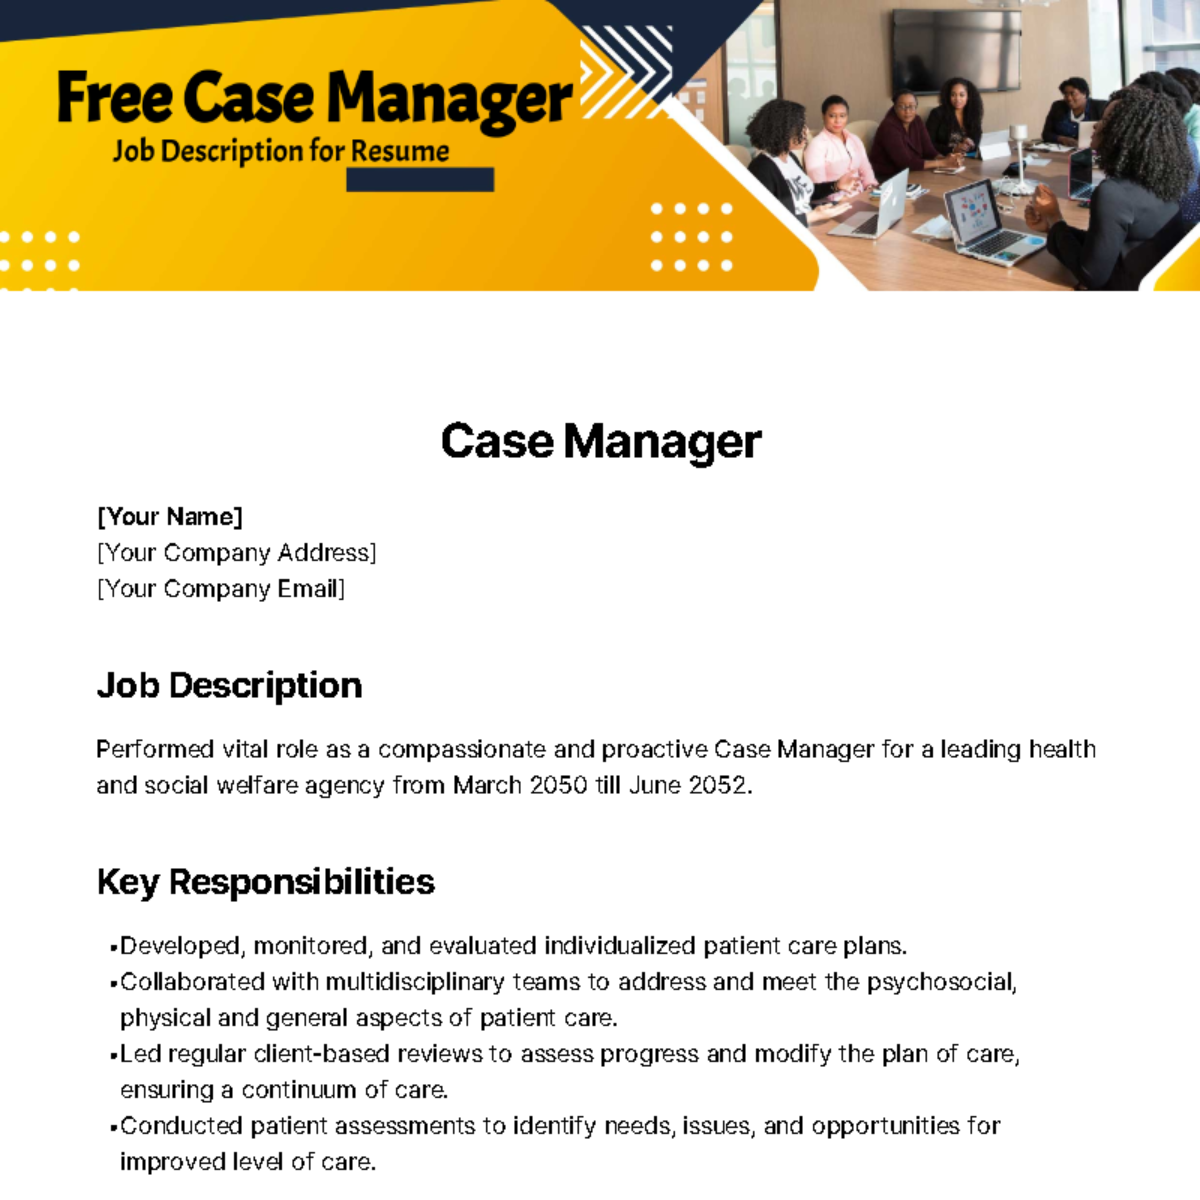 Case Manager Job Description for Resume Template